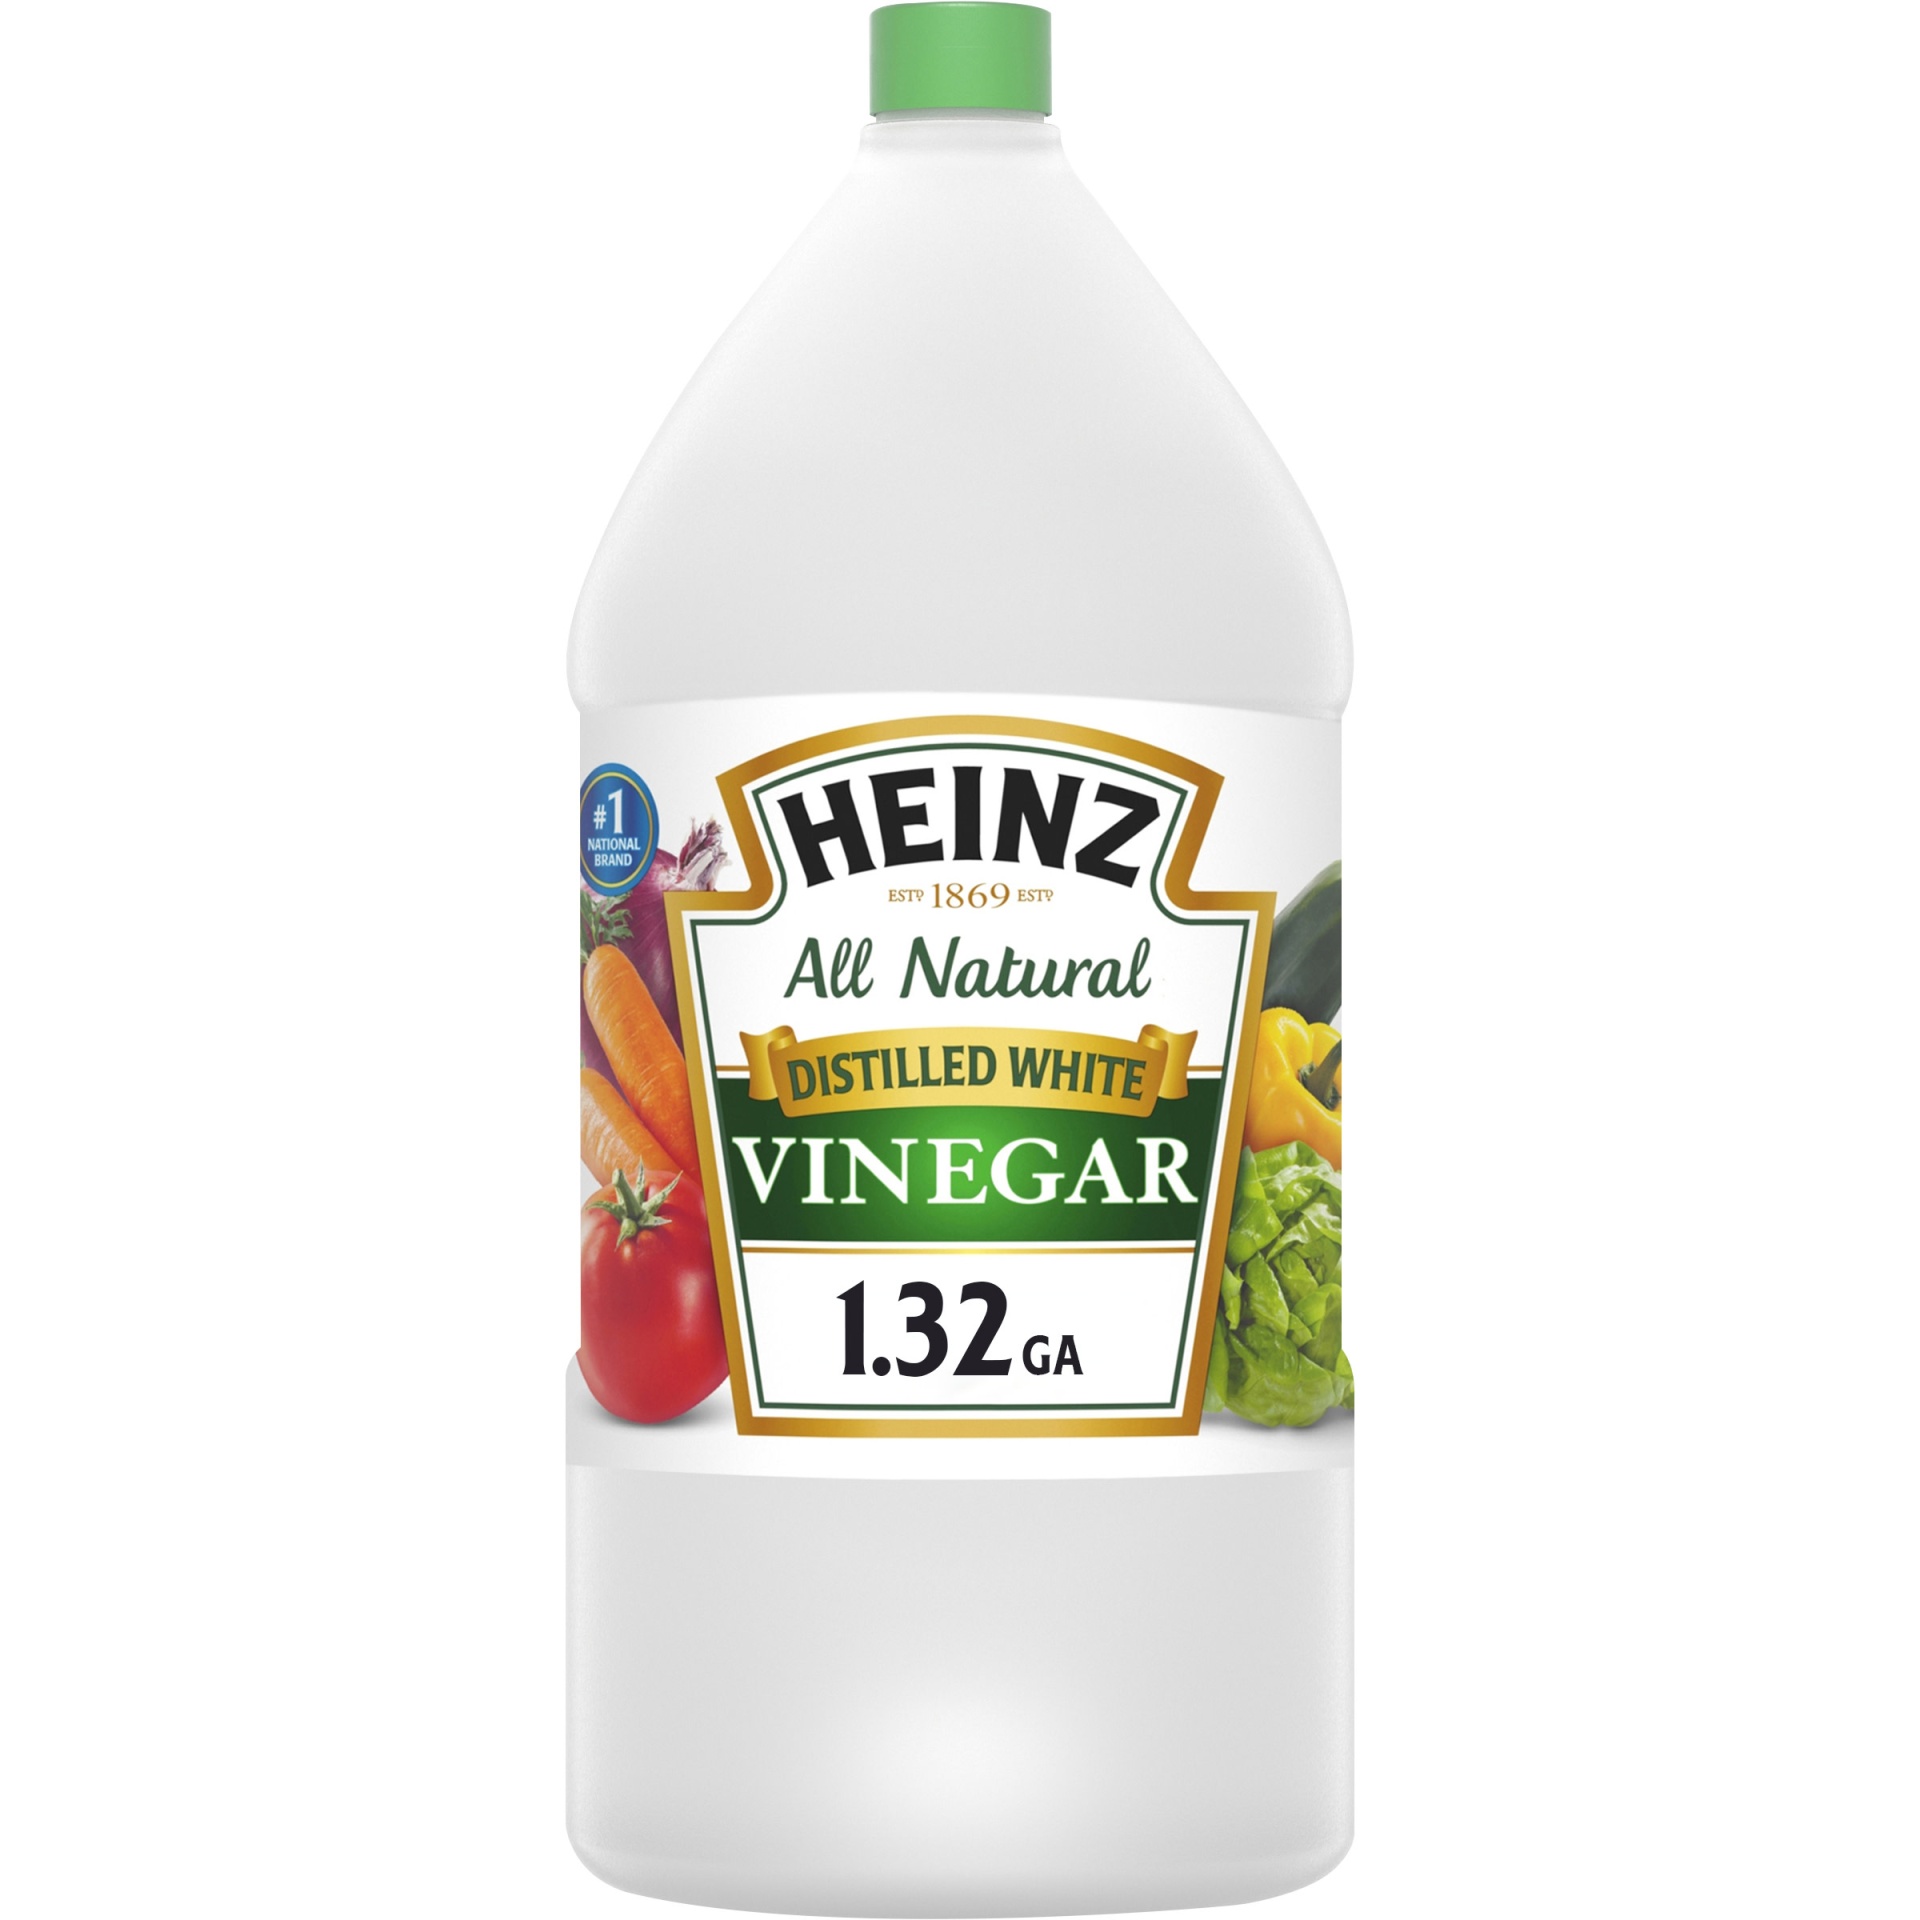 slide 1 of 2, Heinz All Natural Distilled White Vinegar with 5% Acidity Jug, 1.32 gal